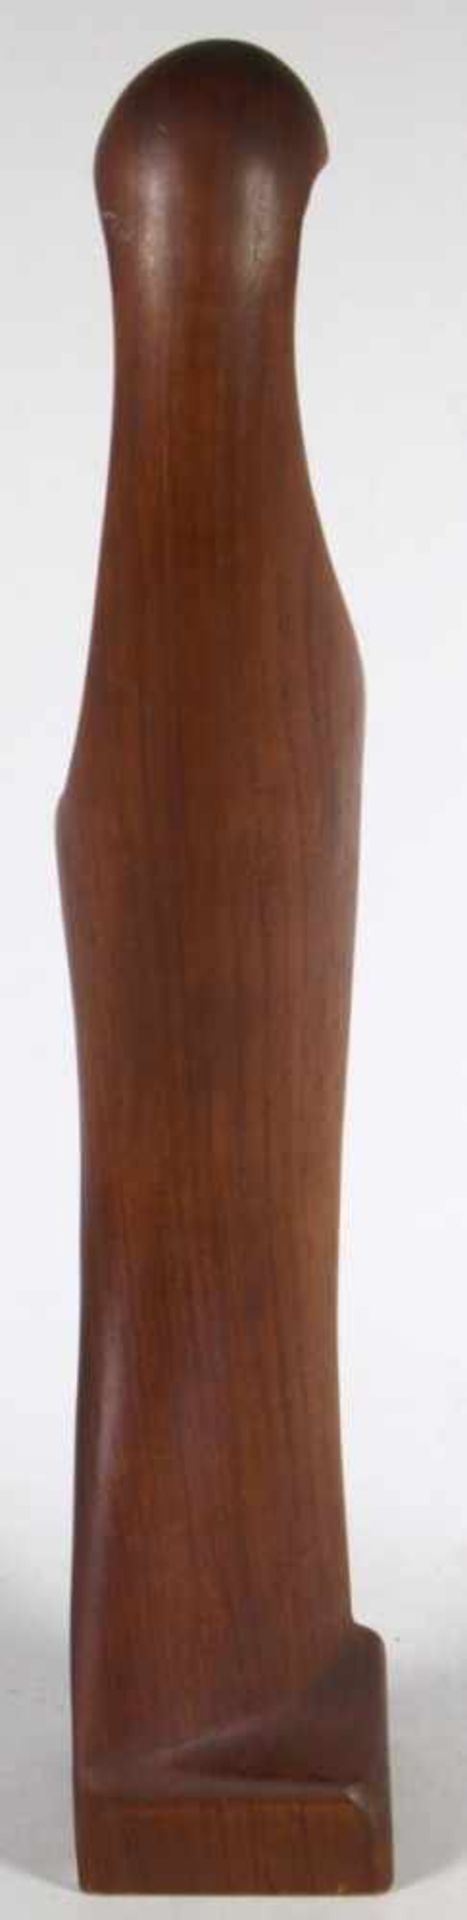 Holz-Figur, "Abstrakte Figurendarstellung", Design Simon, Dänemark, 50er Jahre, überRechtecksockel - Bild 2 aus 3